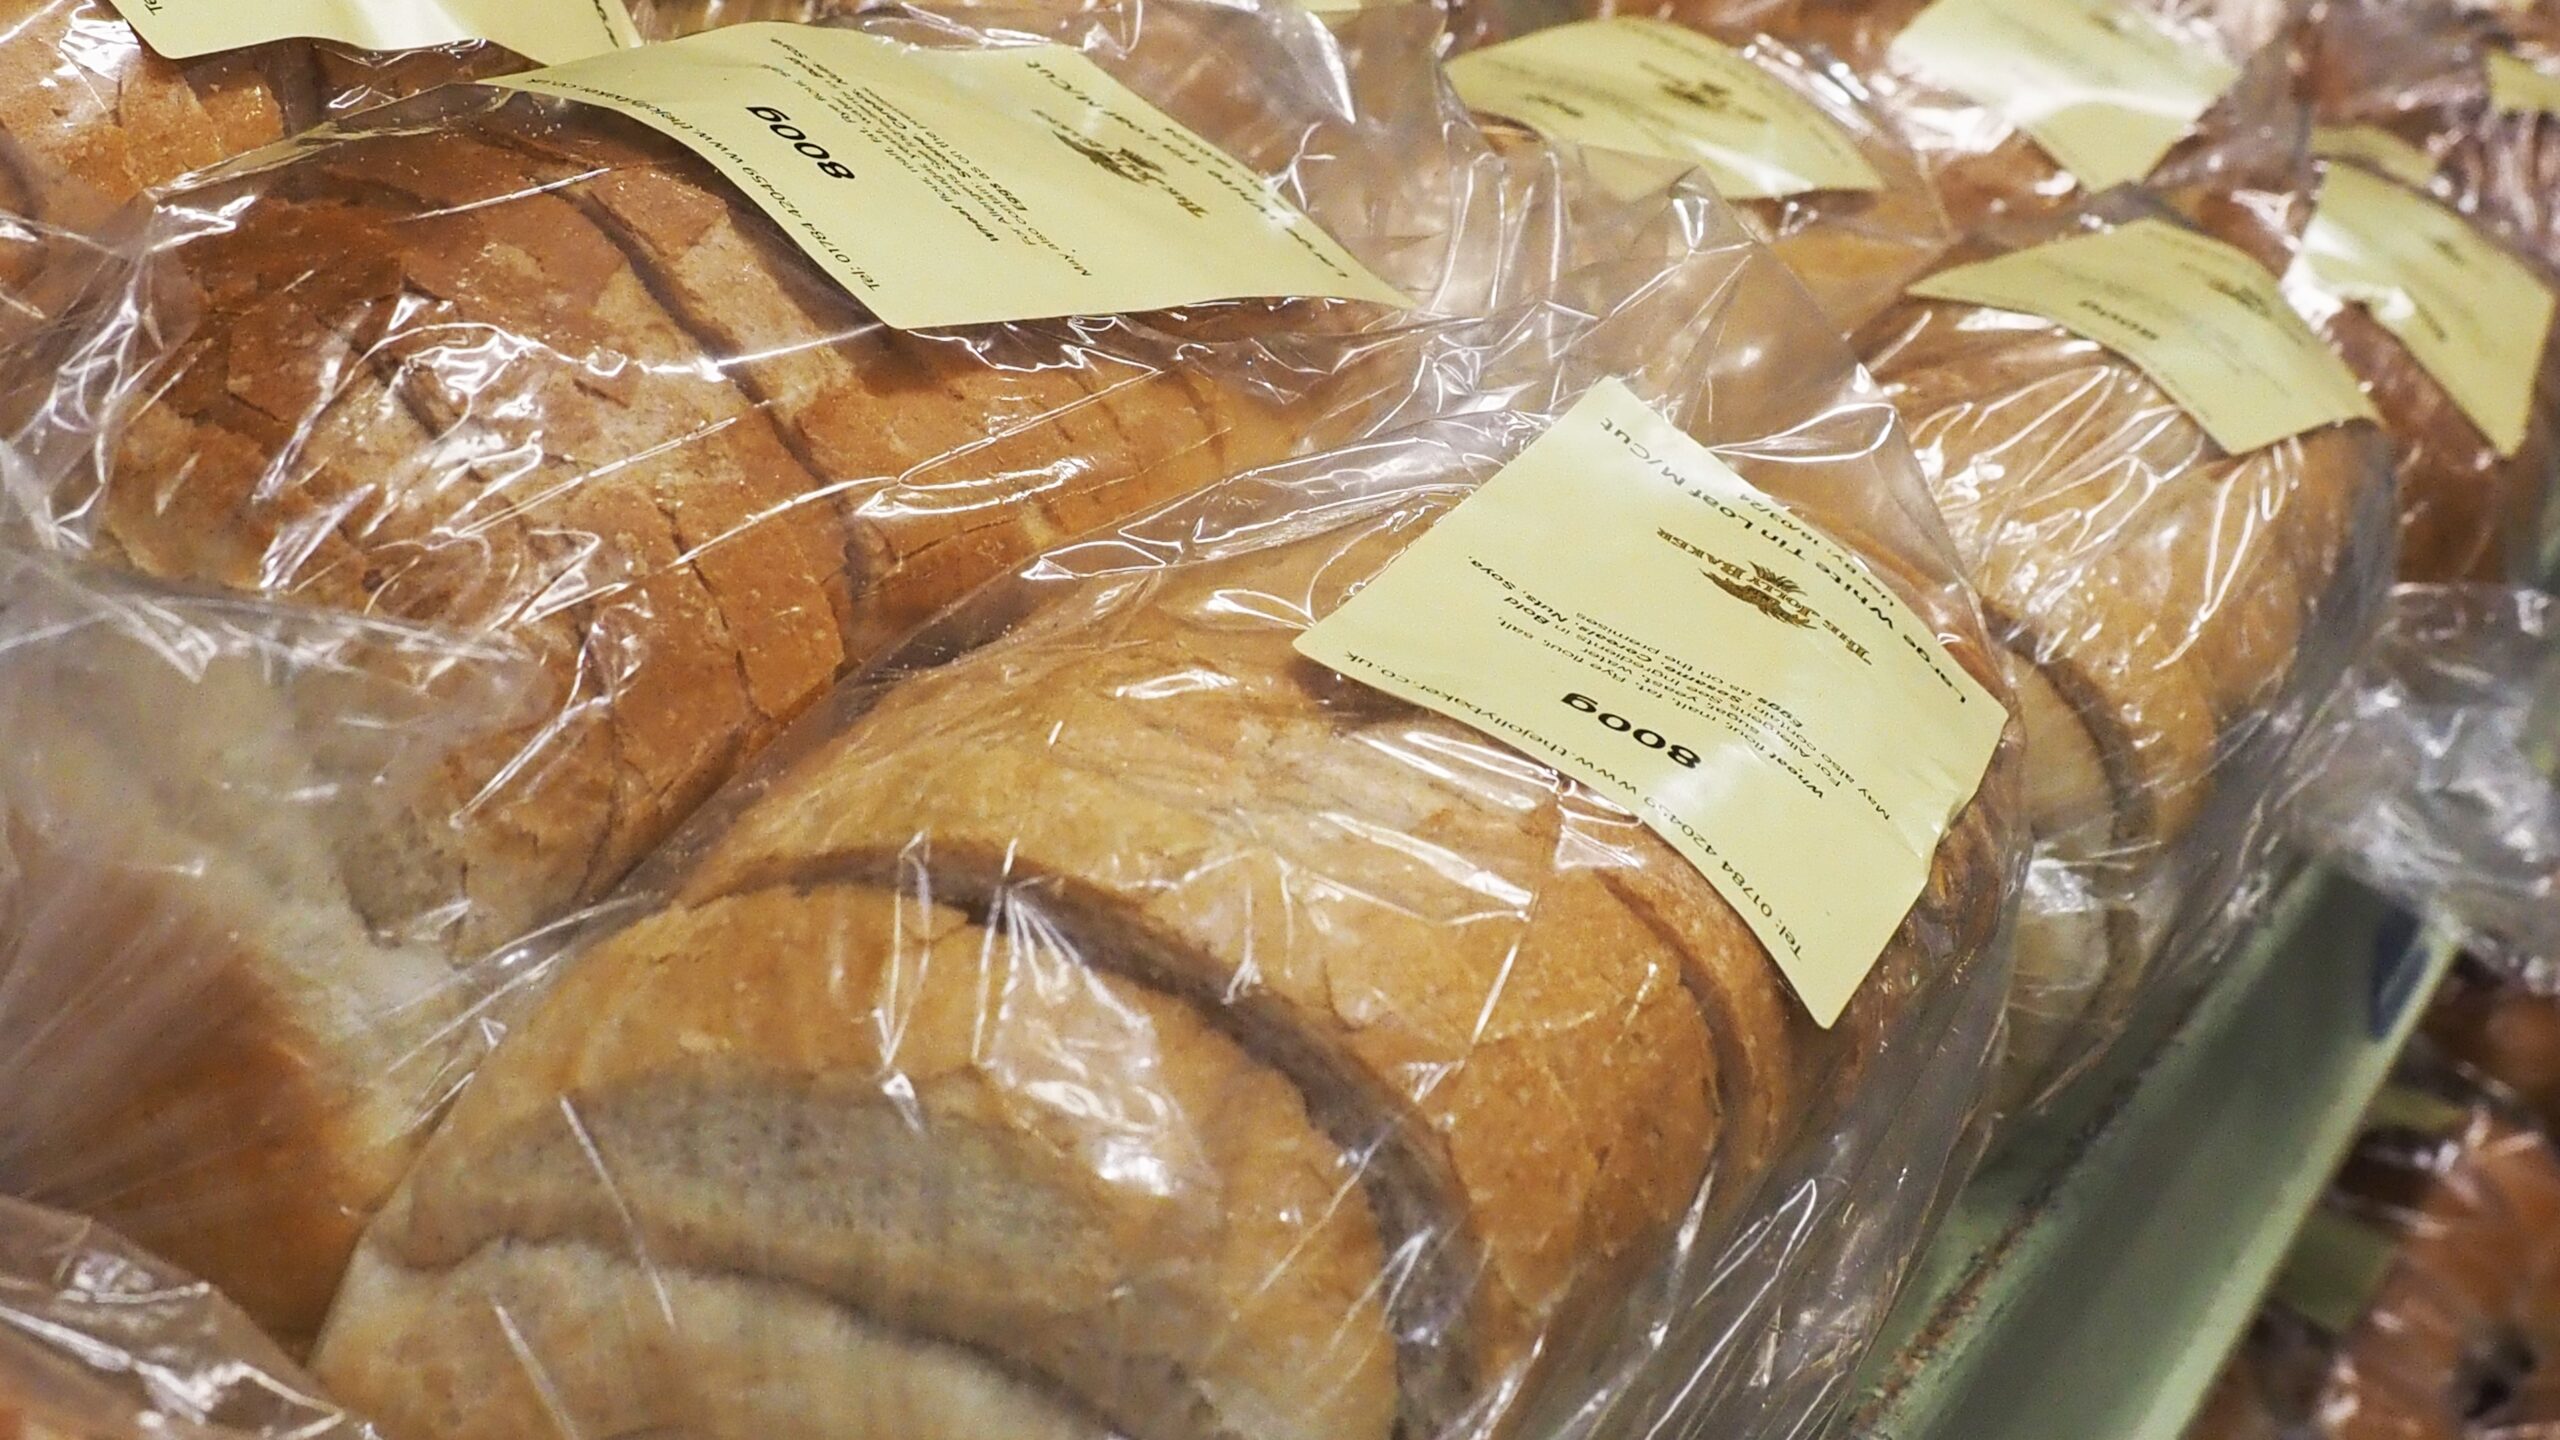 Bread display at Windsor Farm Shop.